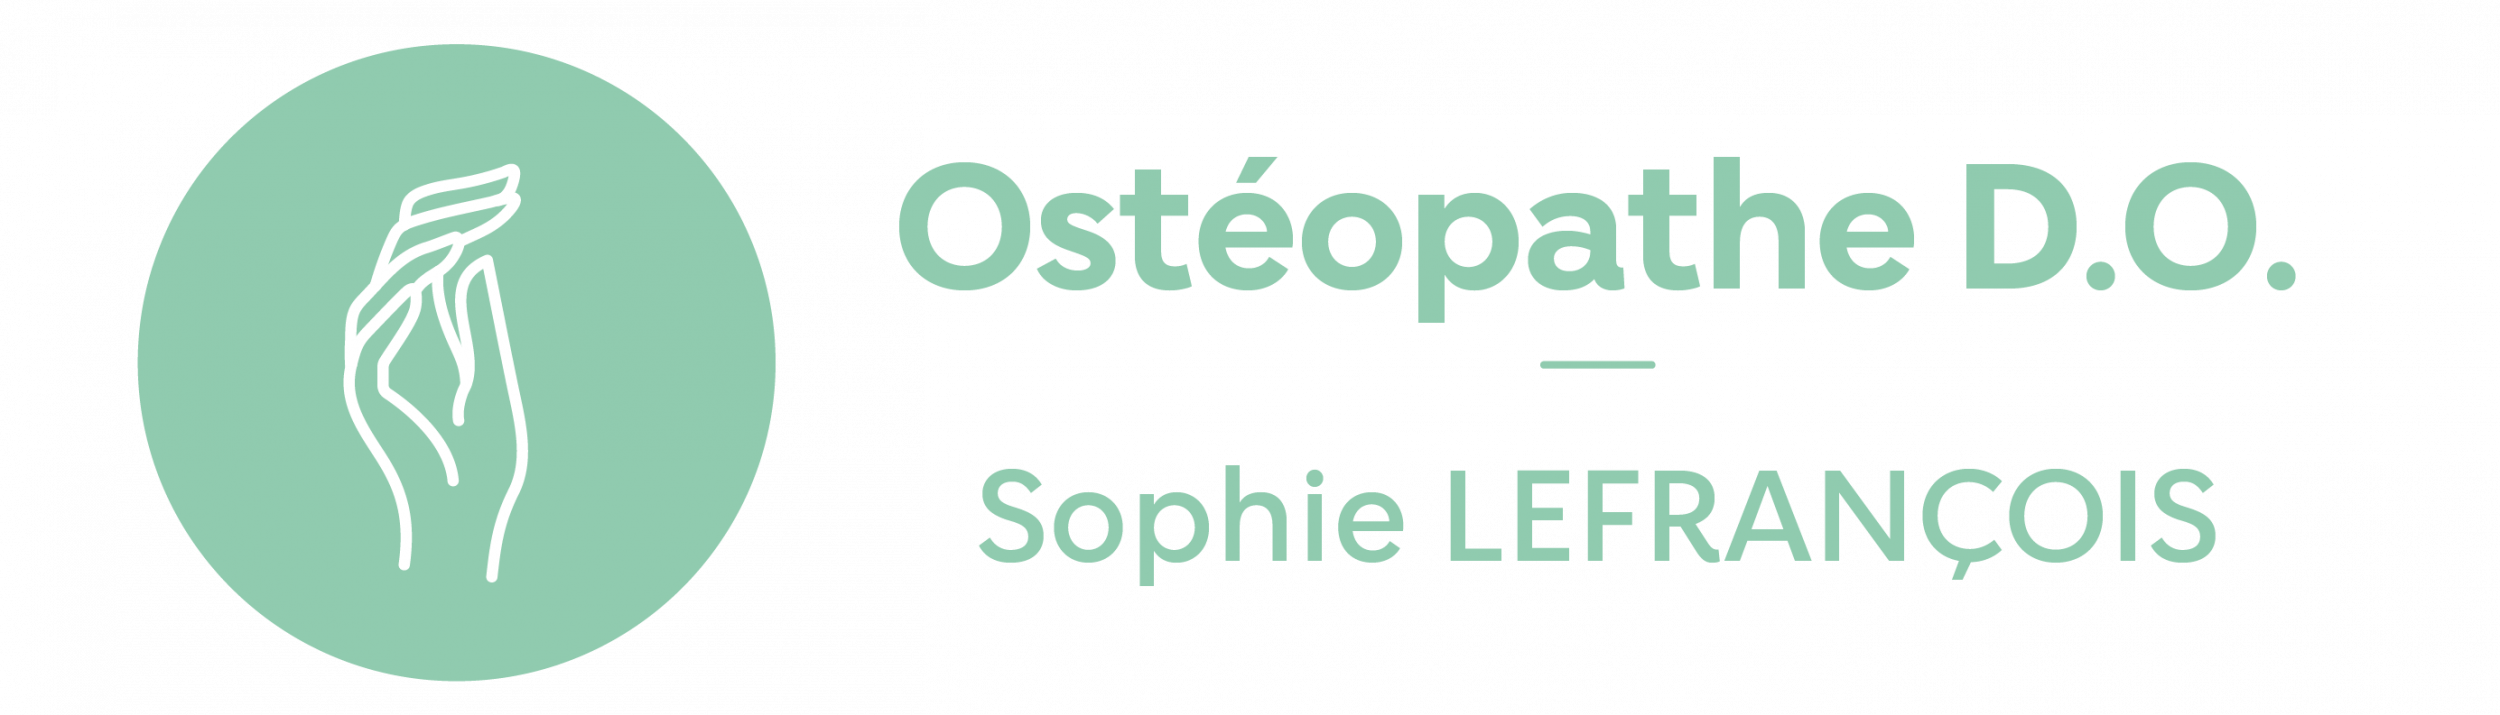 Sophie Lefrançois – Ostéopathe D.O.